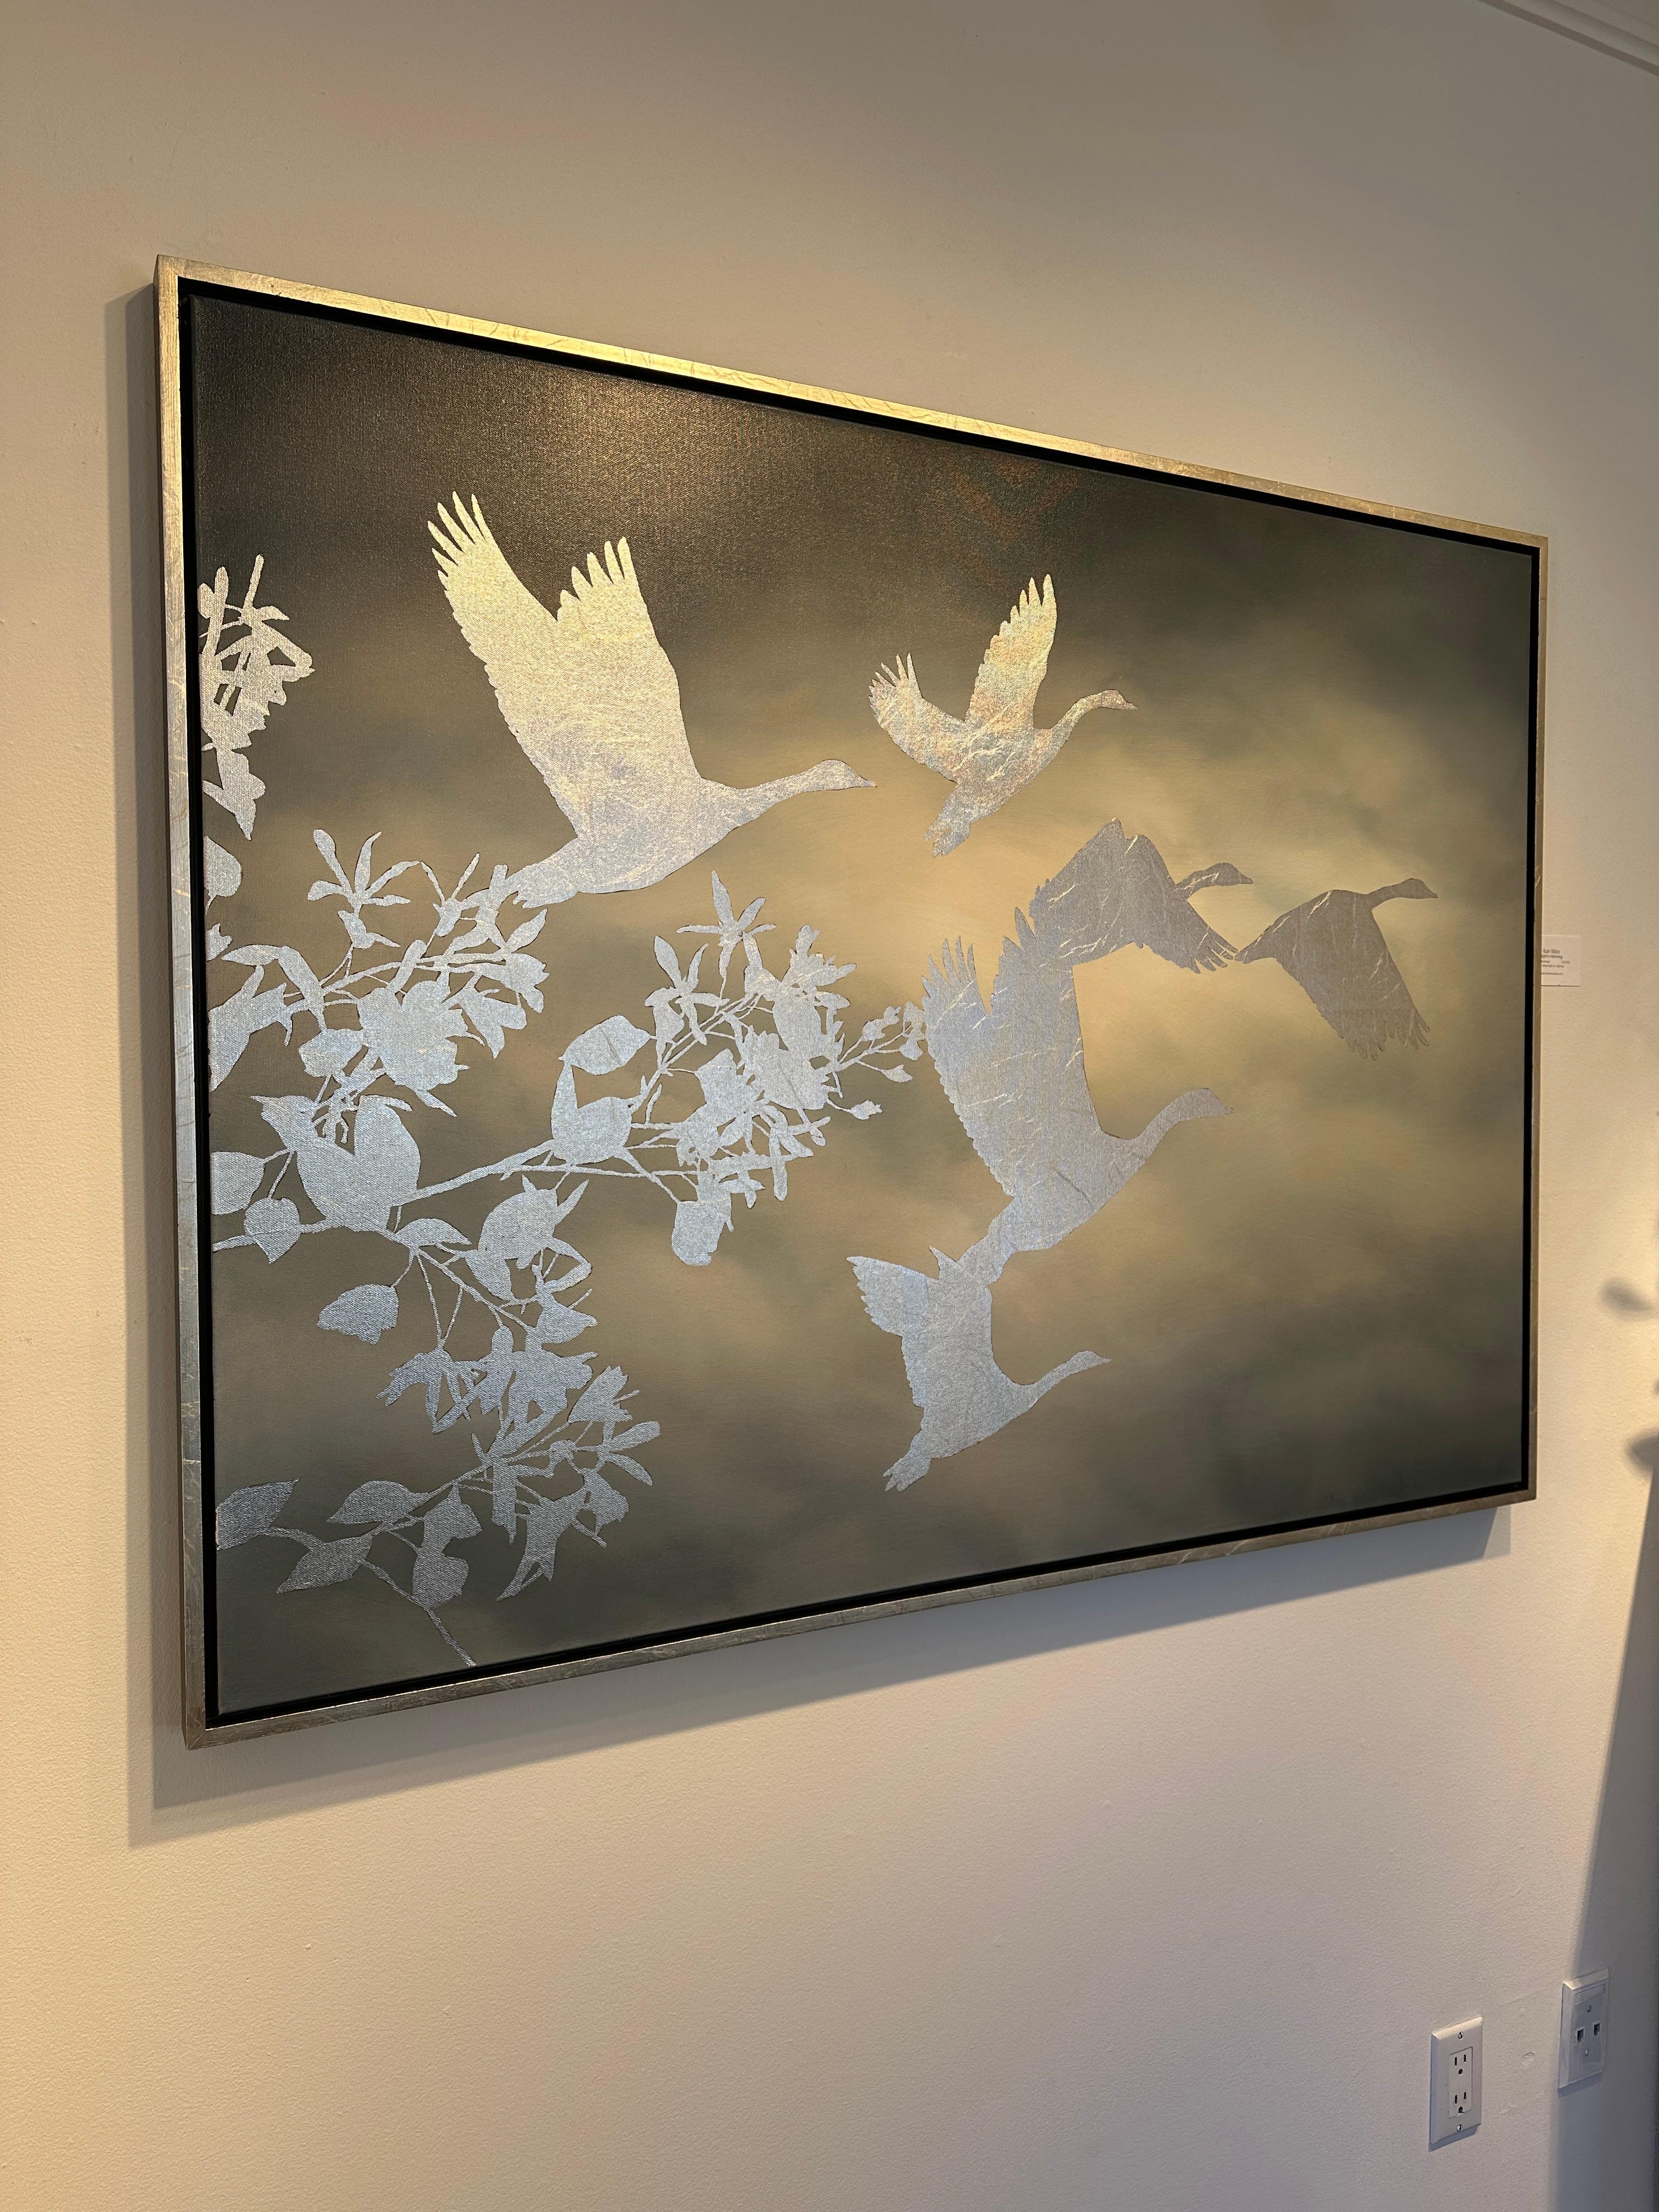 Flight in Morning - Contemporary Painting by Kurt Meer